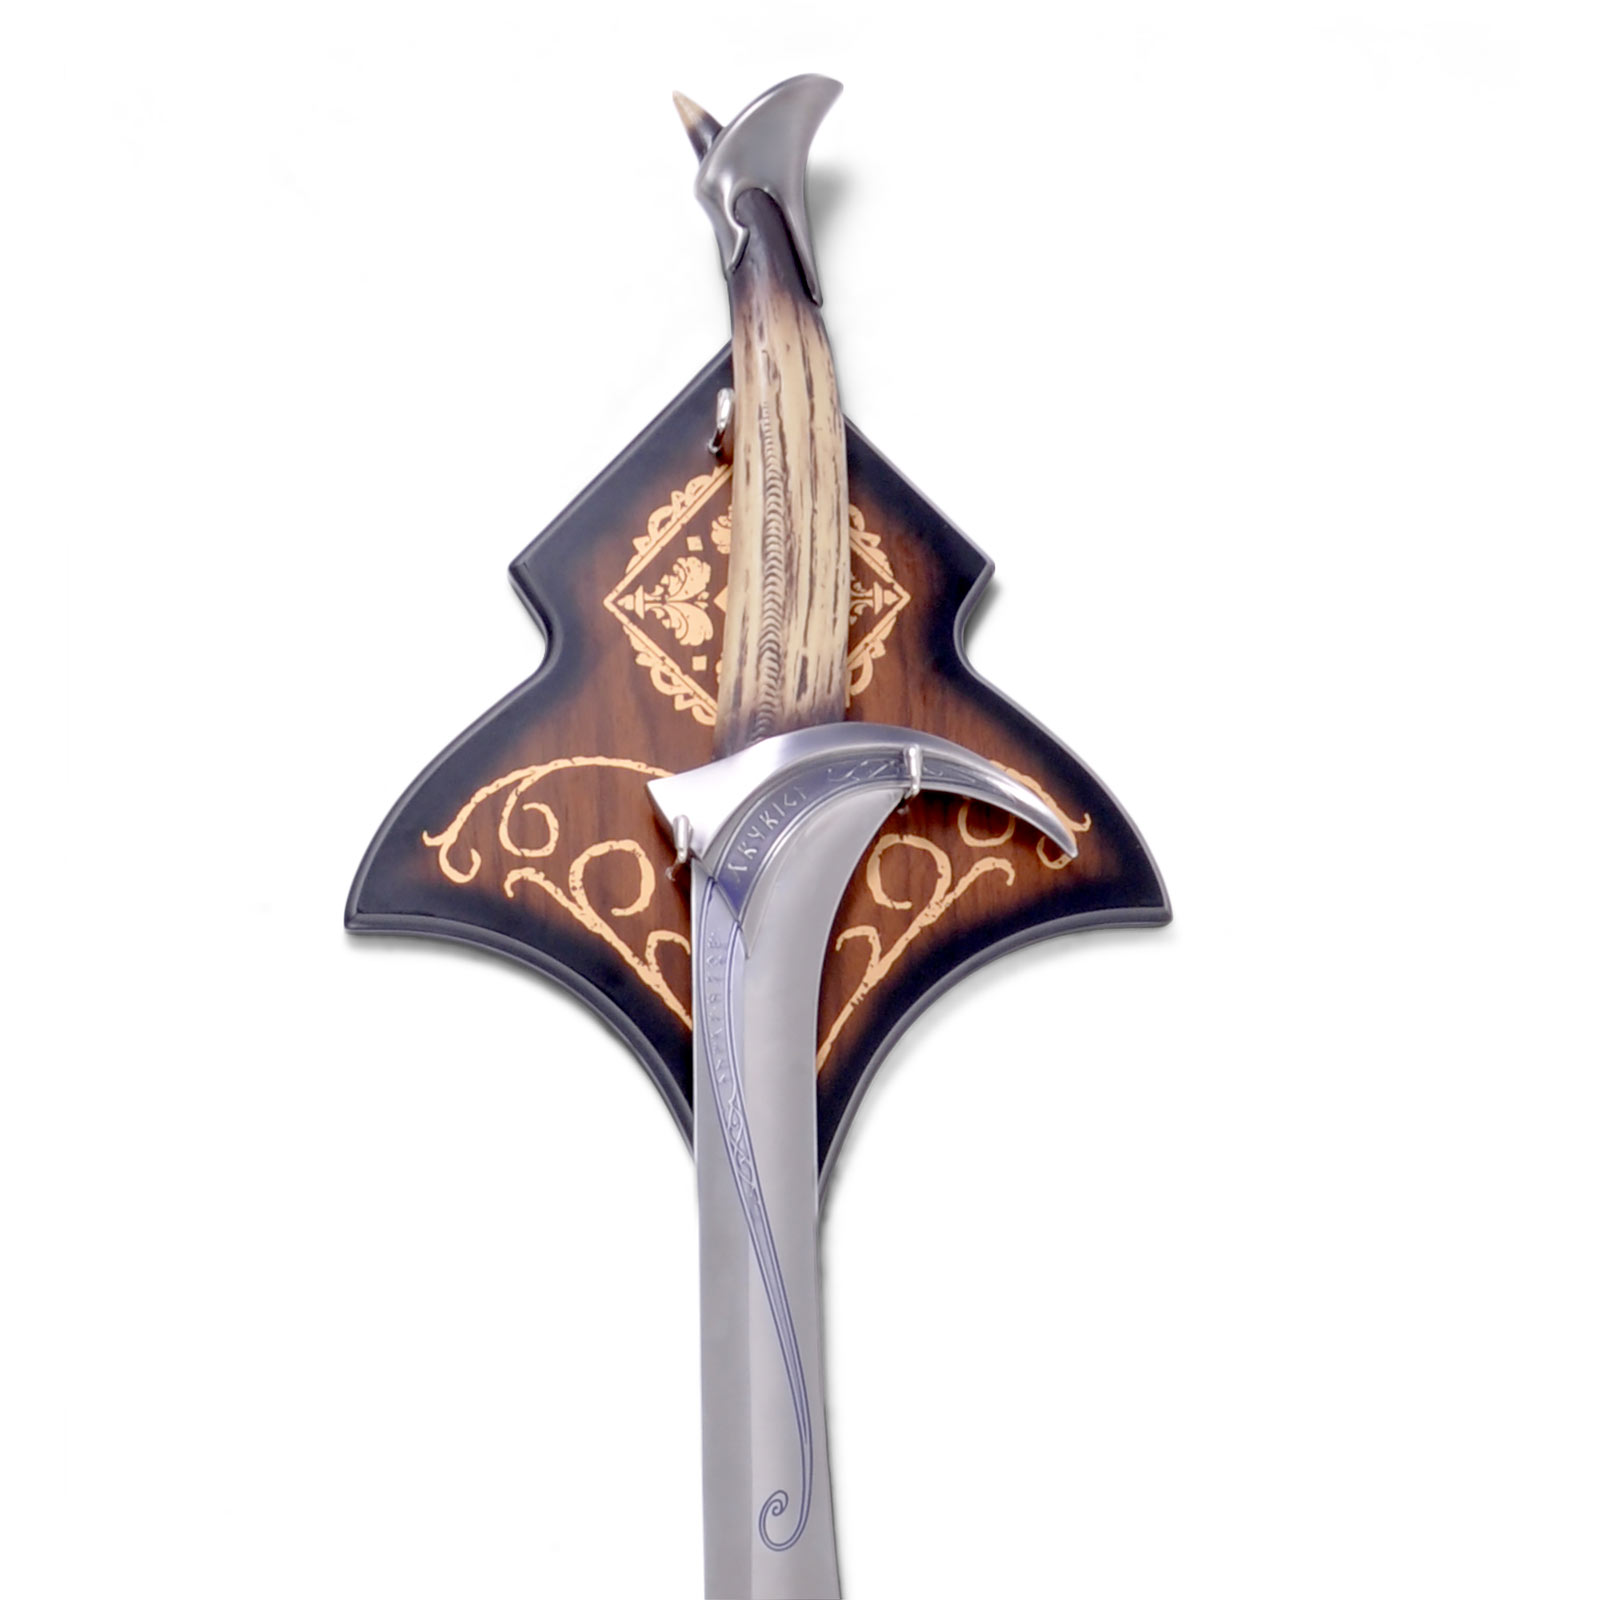 Thorin's Sword - Orcrist